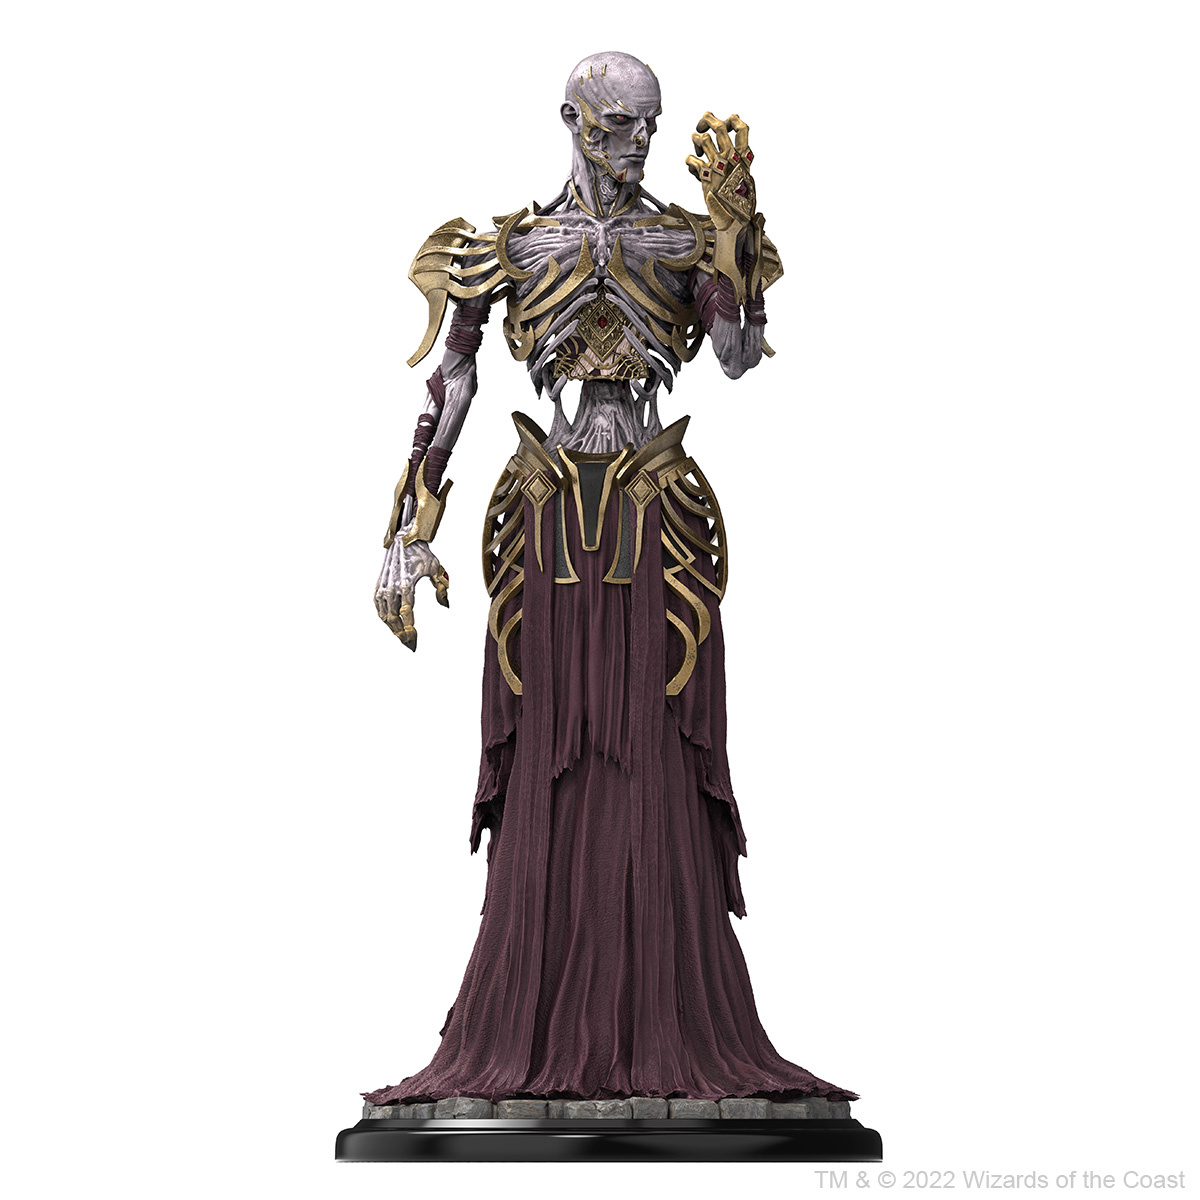 Pre-Order WizKids Dungeons & Dragons Vecna Premium Statue